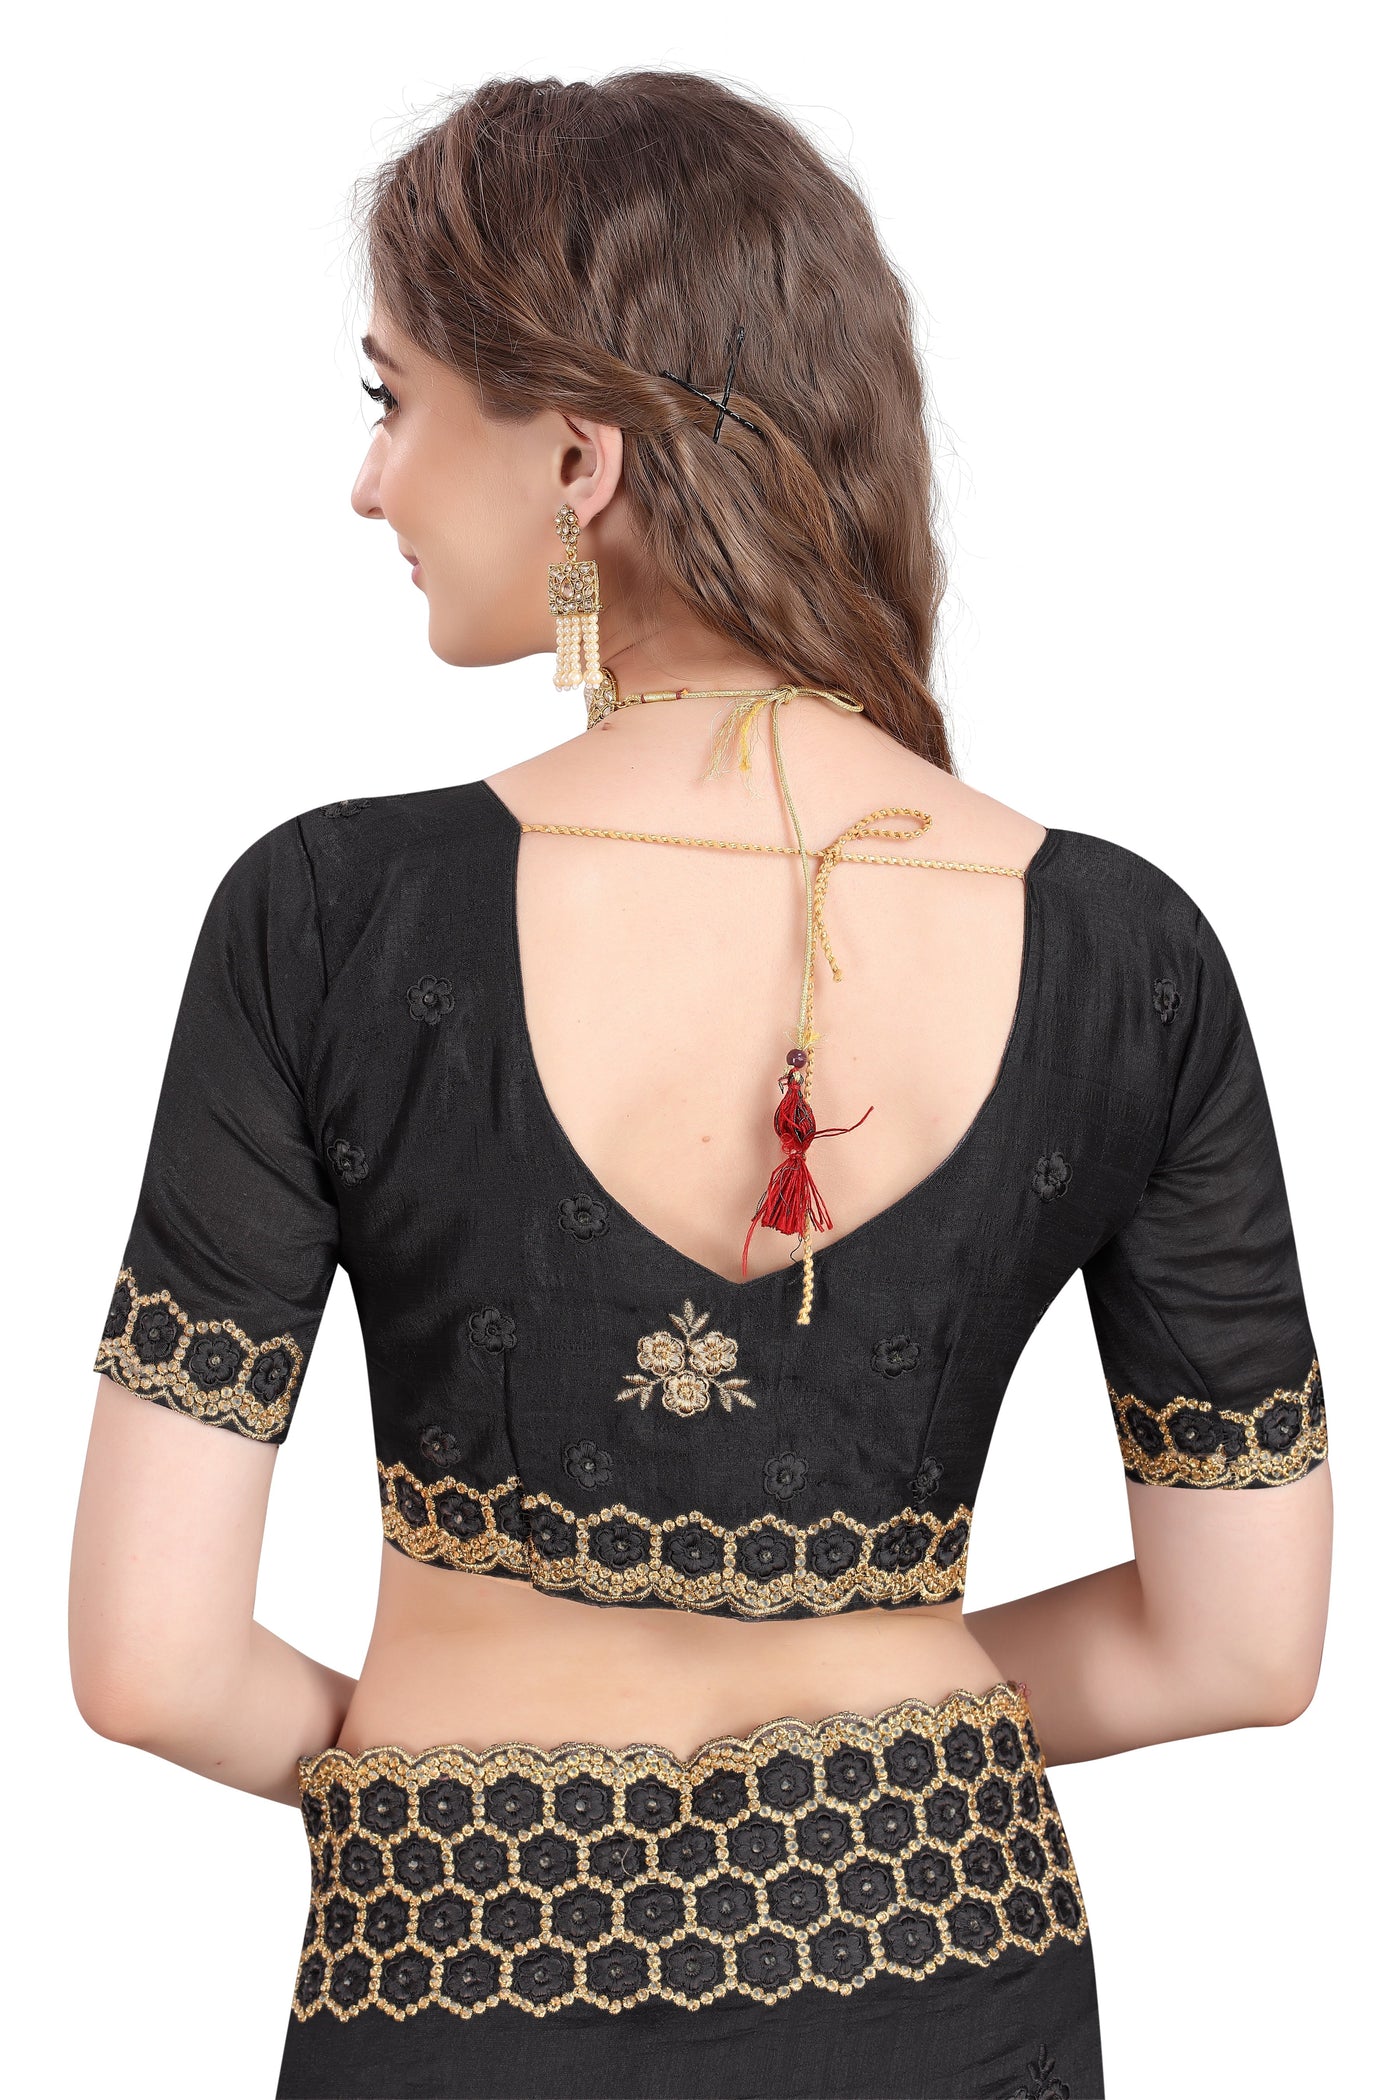 Vichitra Silk Black Saree With Blouse